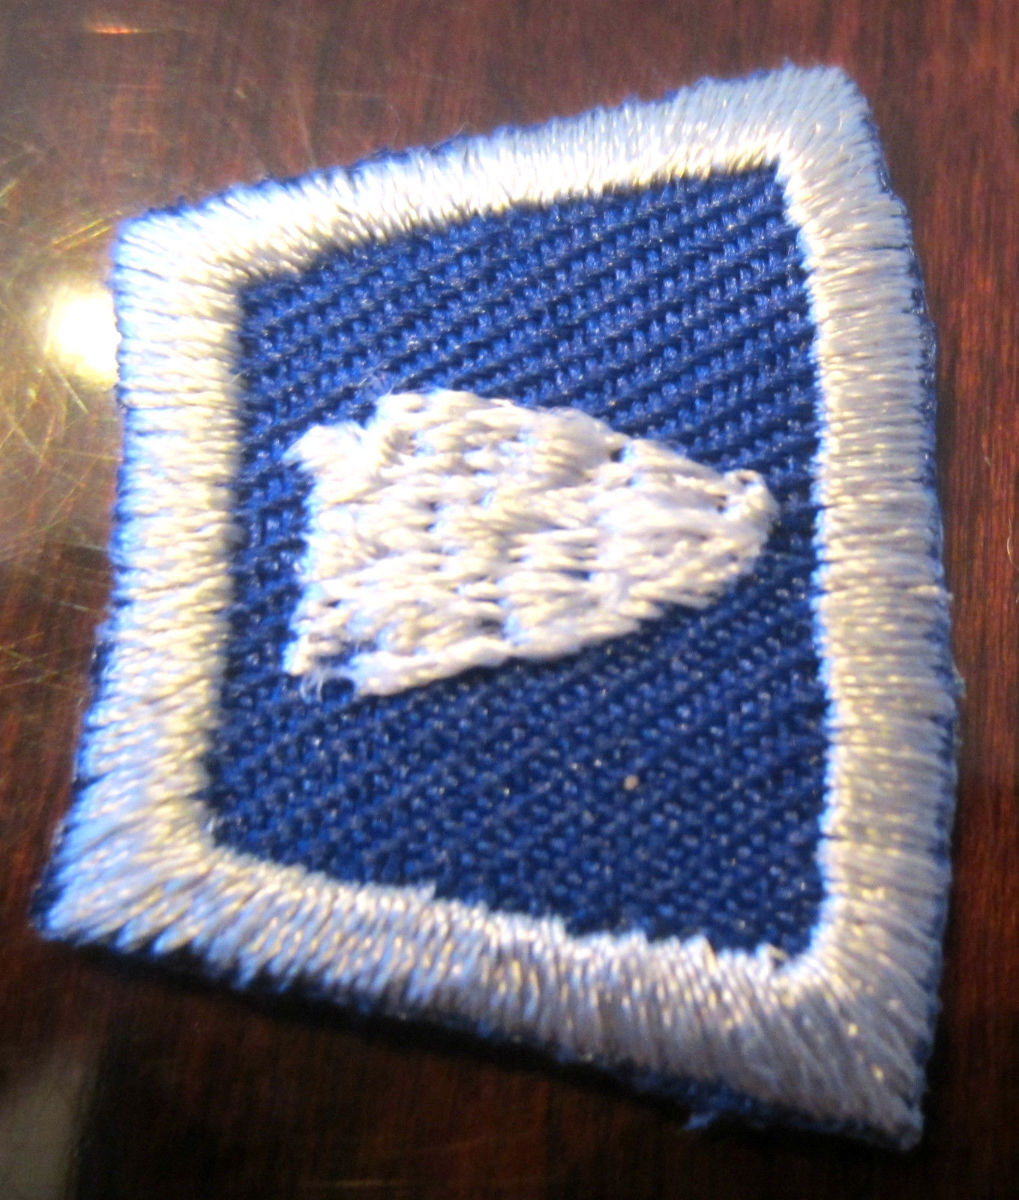 Vintage Uniform Patch Boy Scout Bsa Rocker Bar Award Silver And Blue Arrow Head